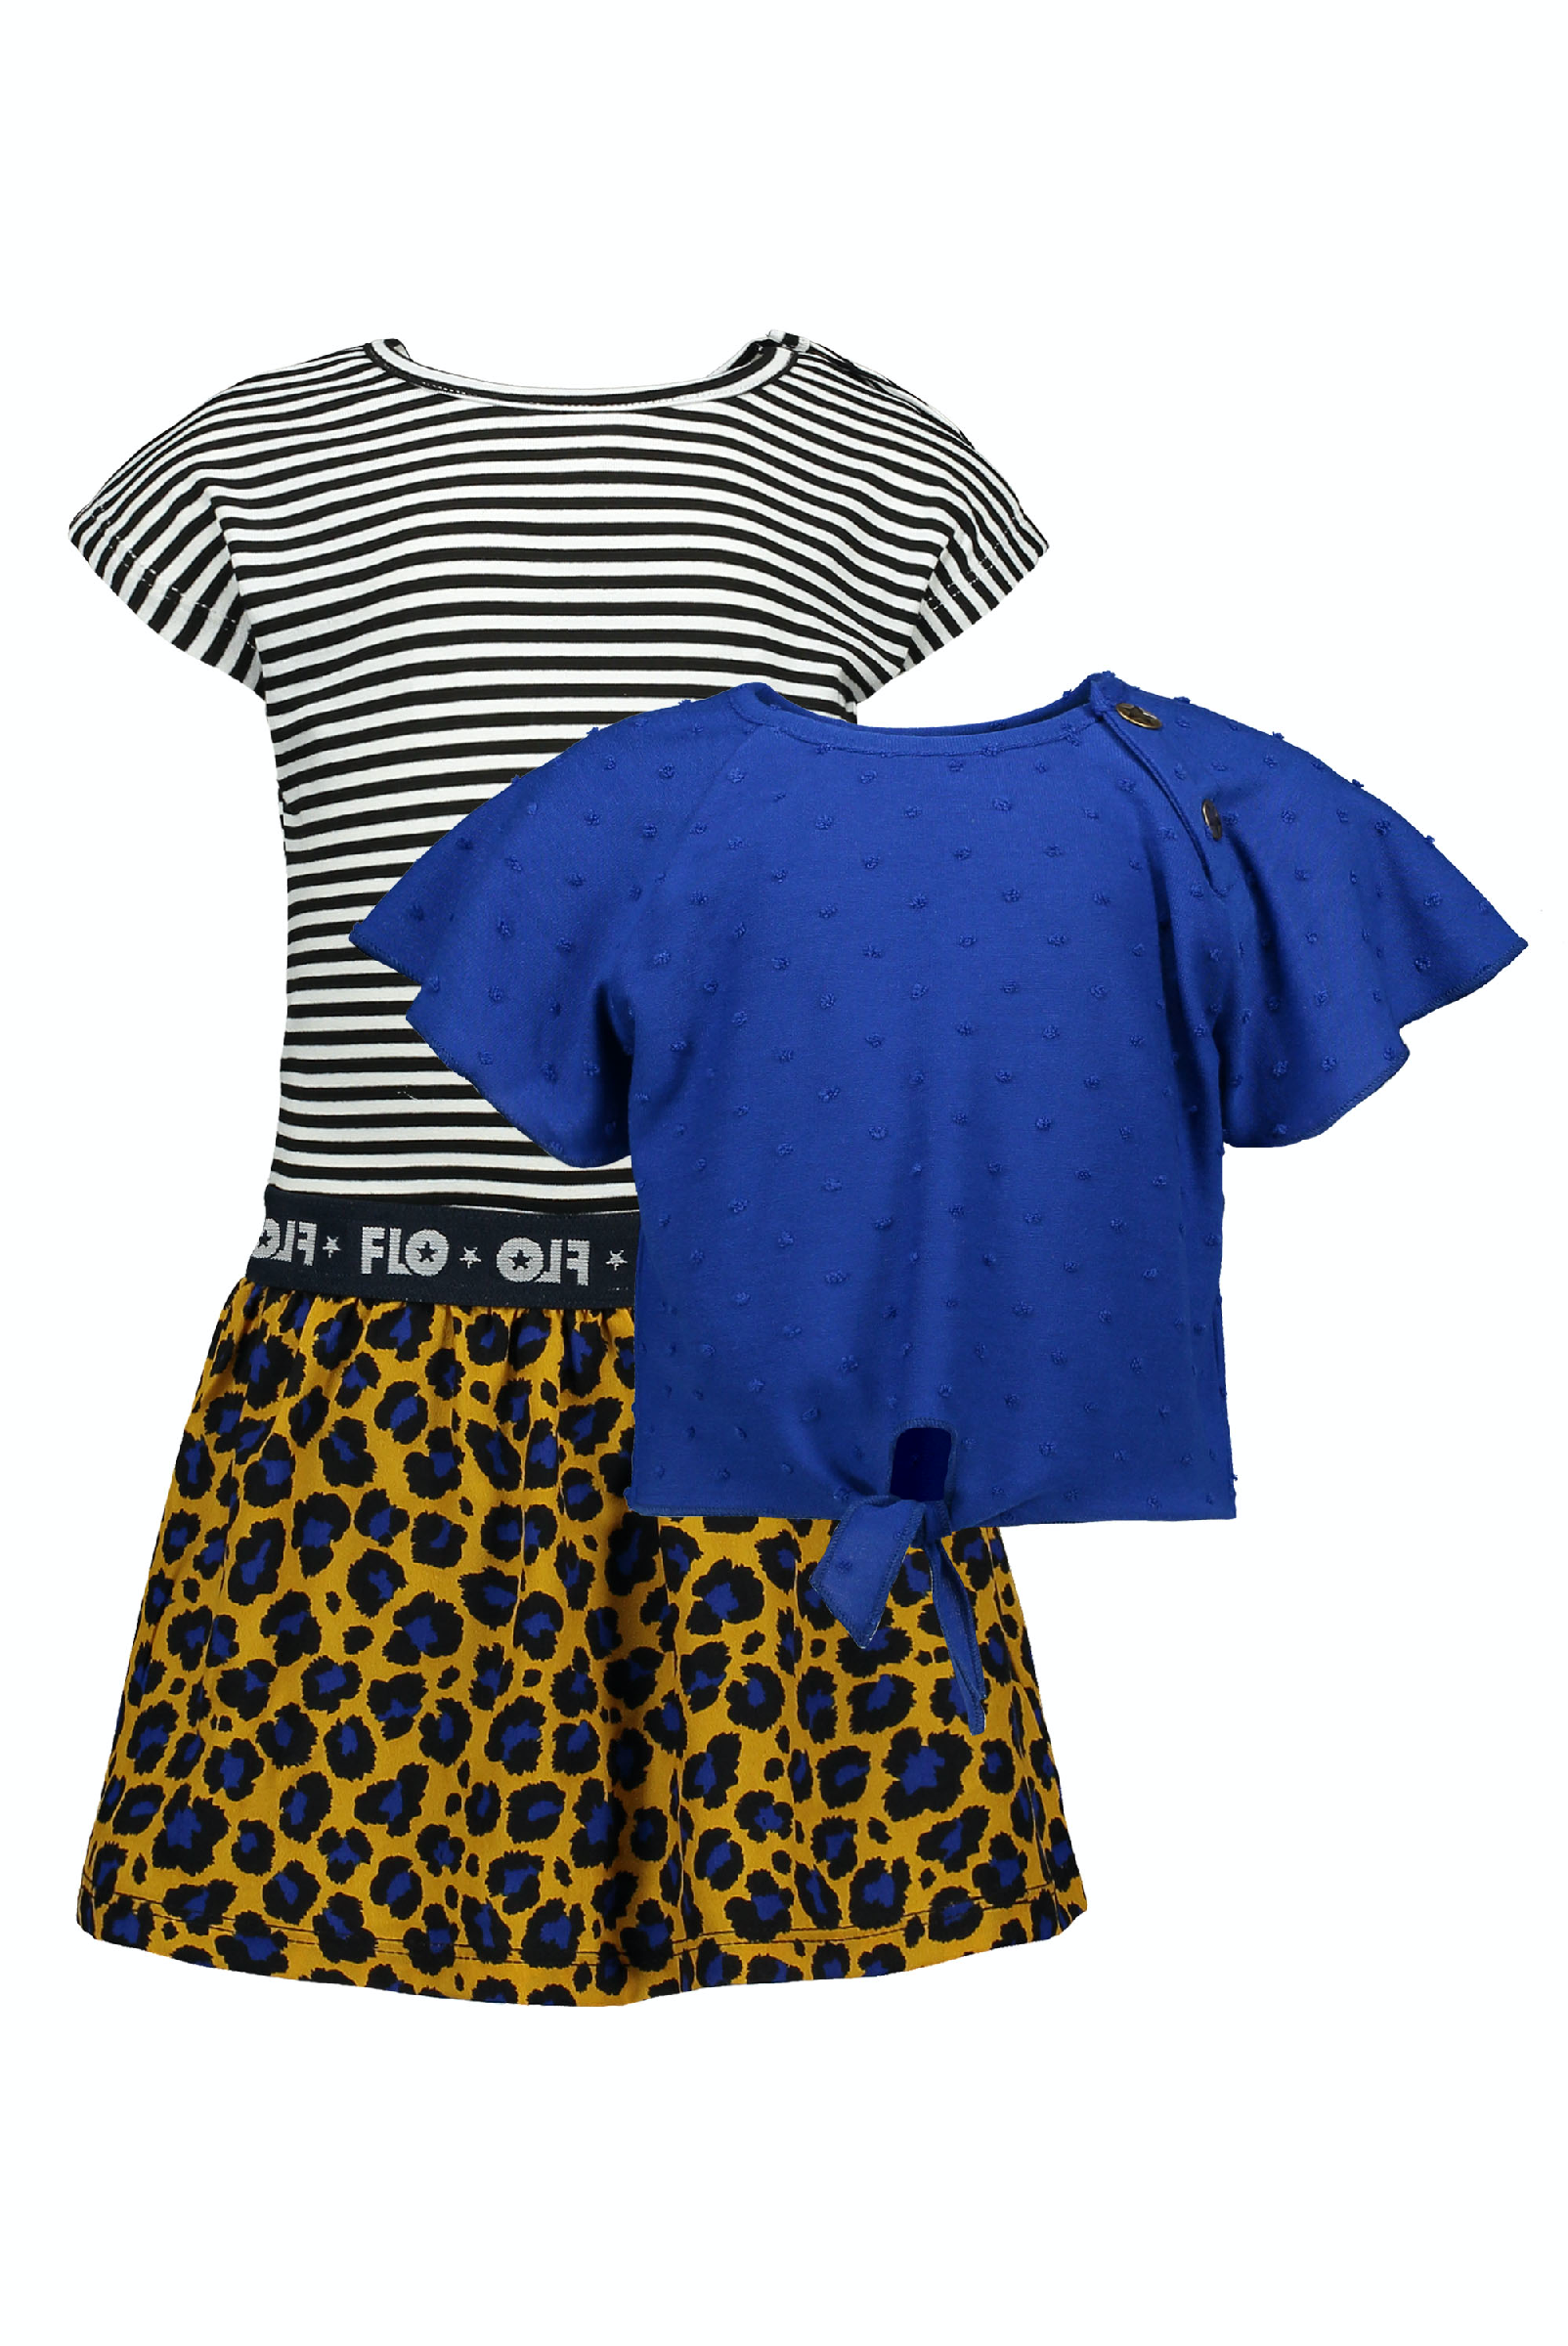 Meisjes Flo baby girls 2pc viscose dot dress with AO panter skirt and knotted stripe tee van Flo in de kleur Cobalt in maat 92.